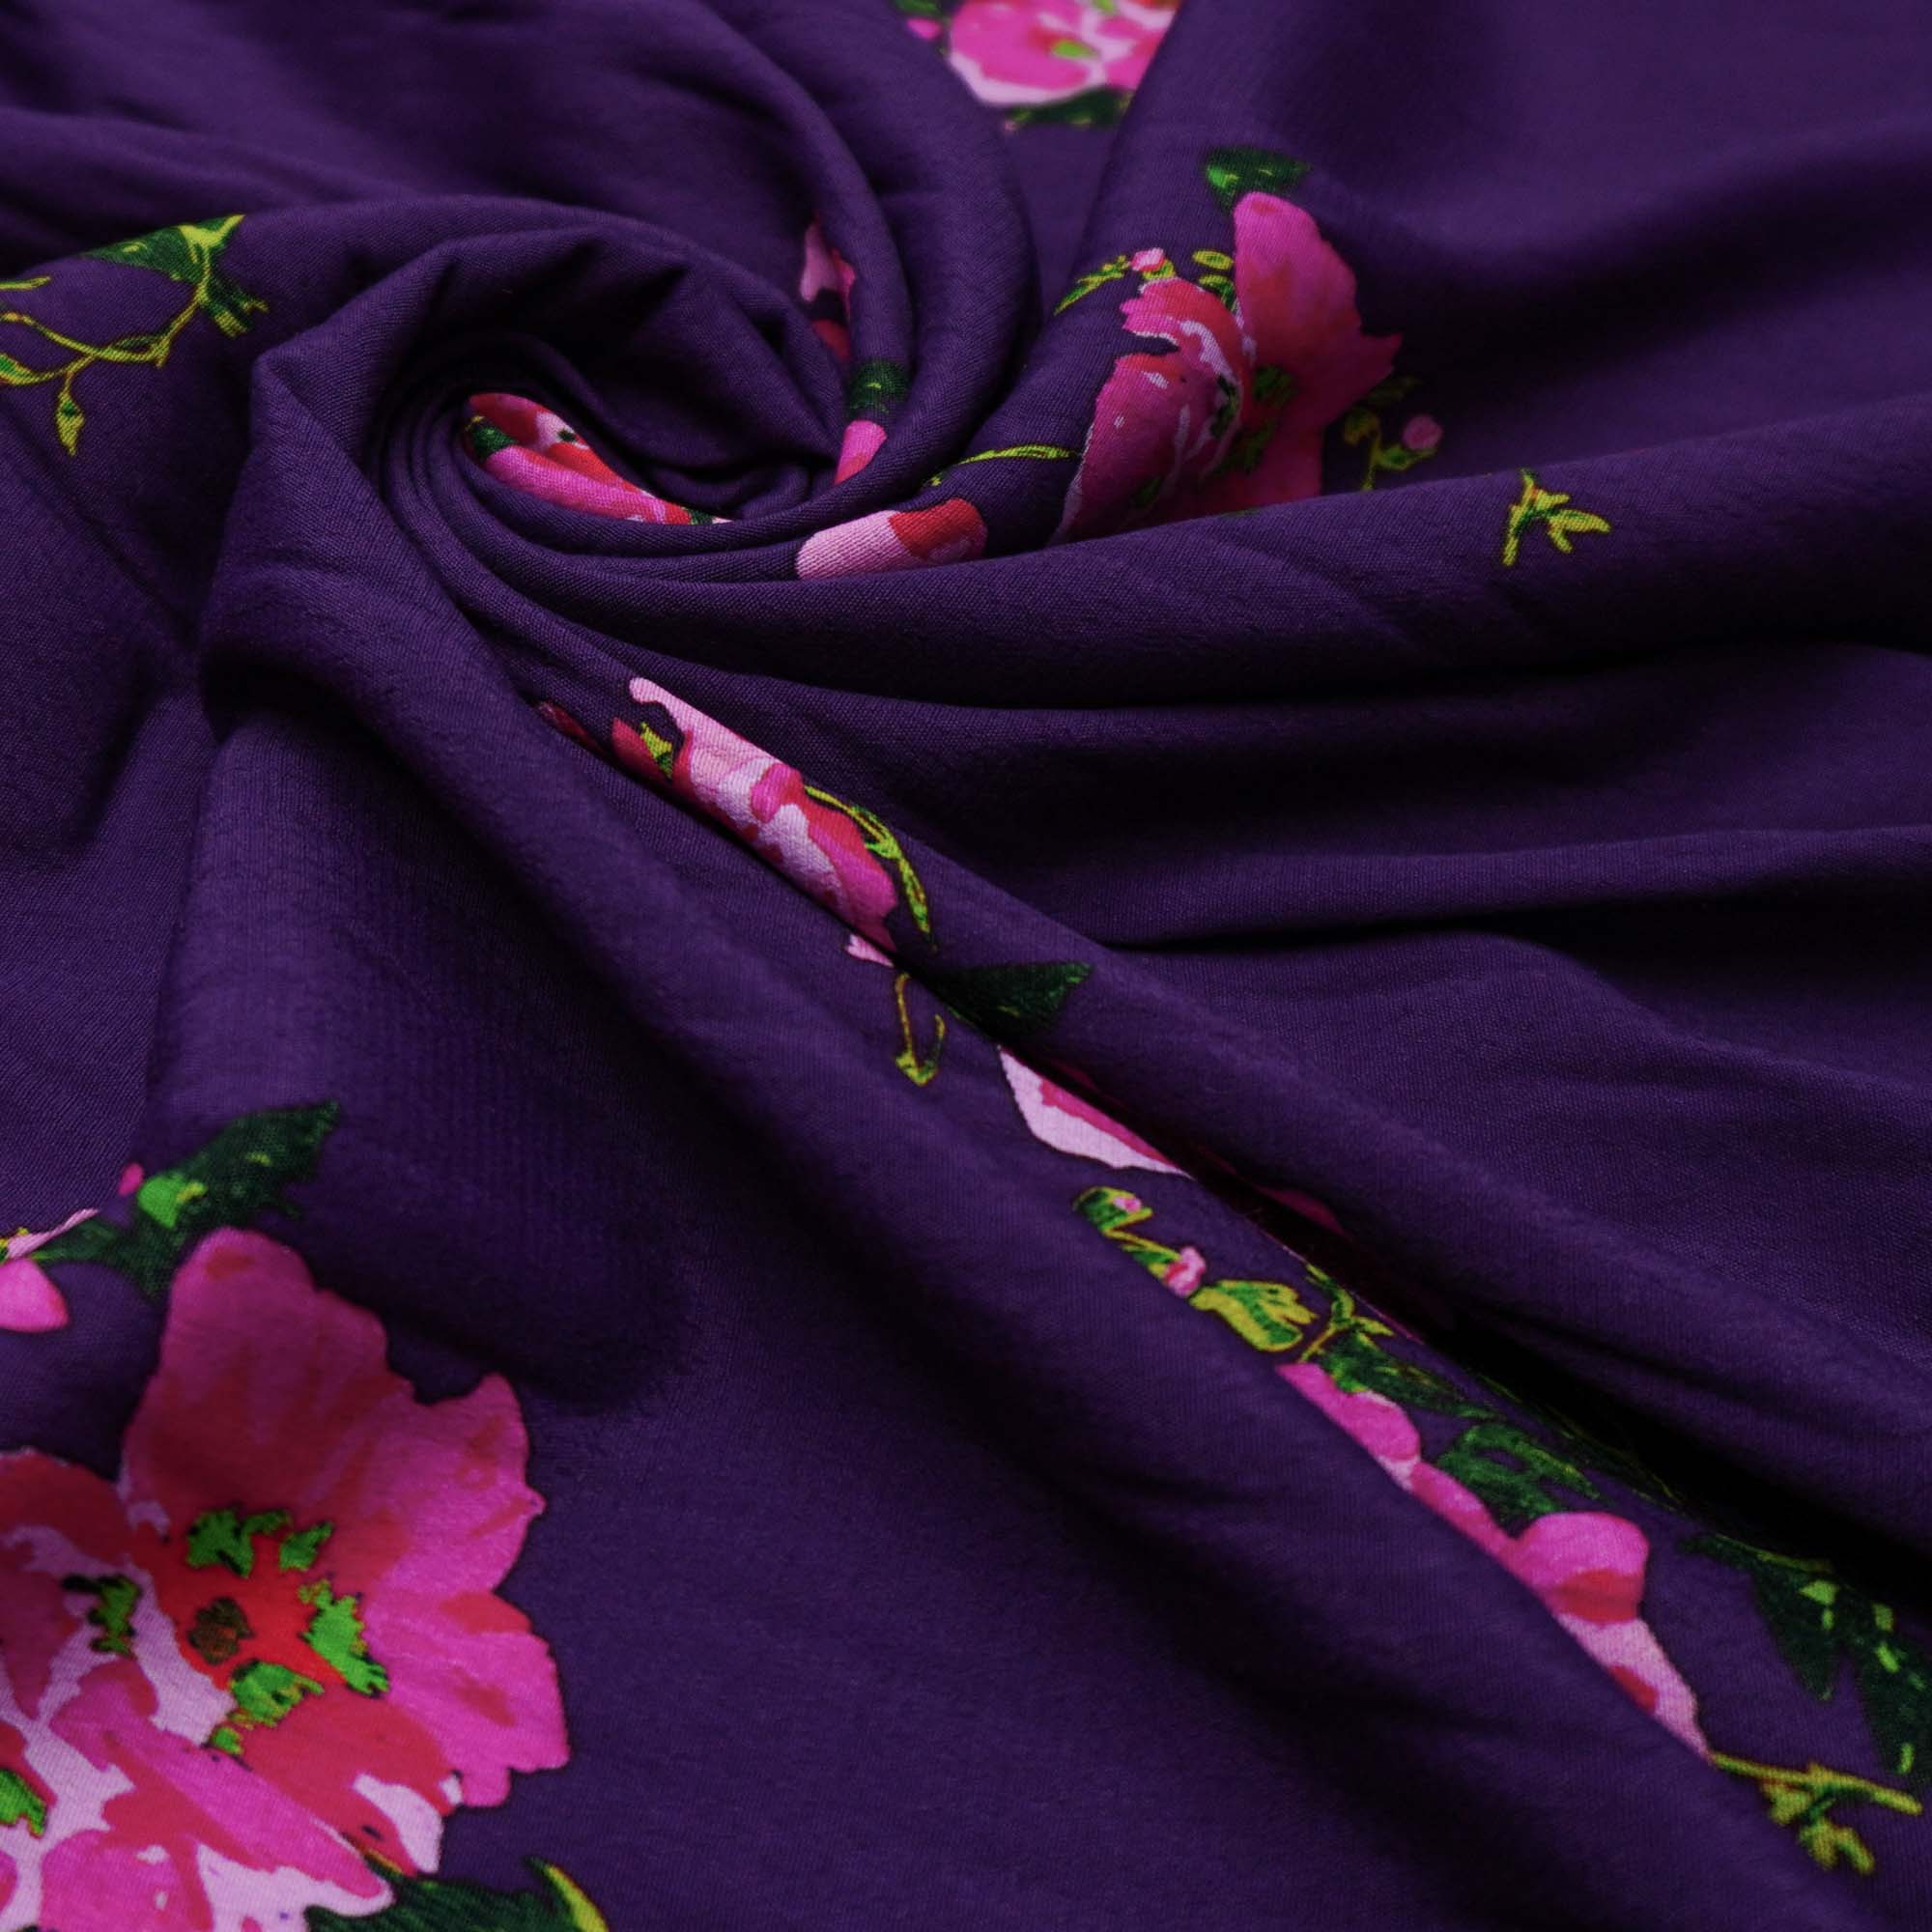 Tecido viscose roxo estampado floral (tecido italiano legítimo)